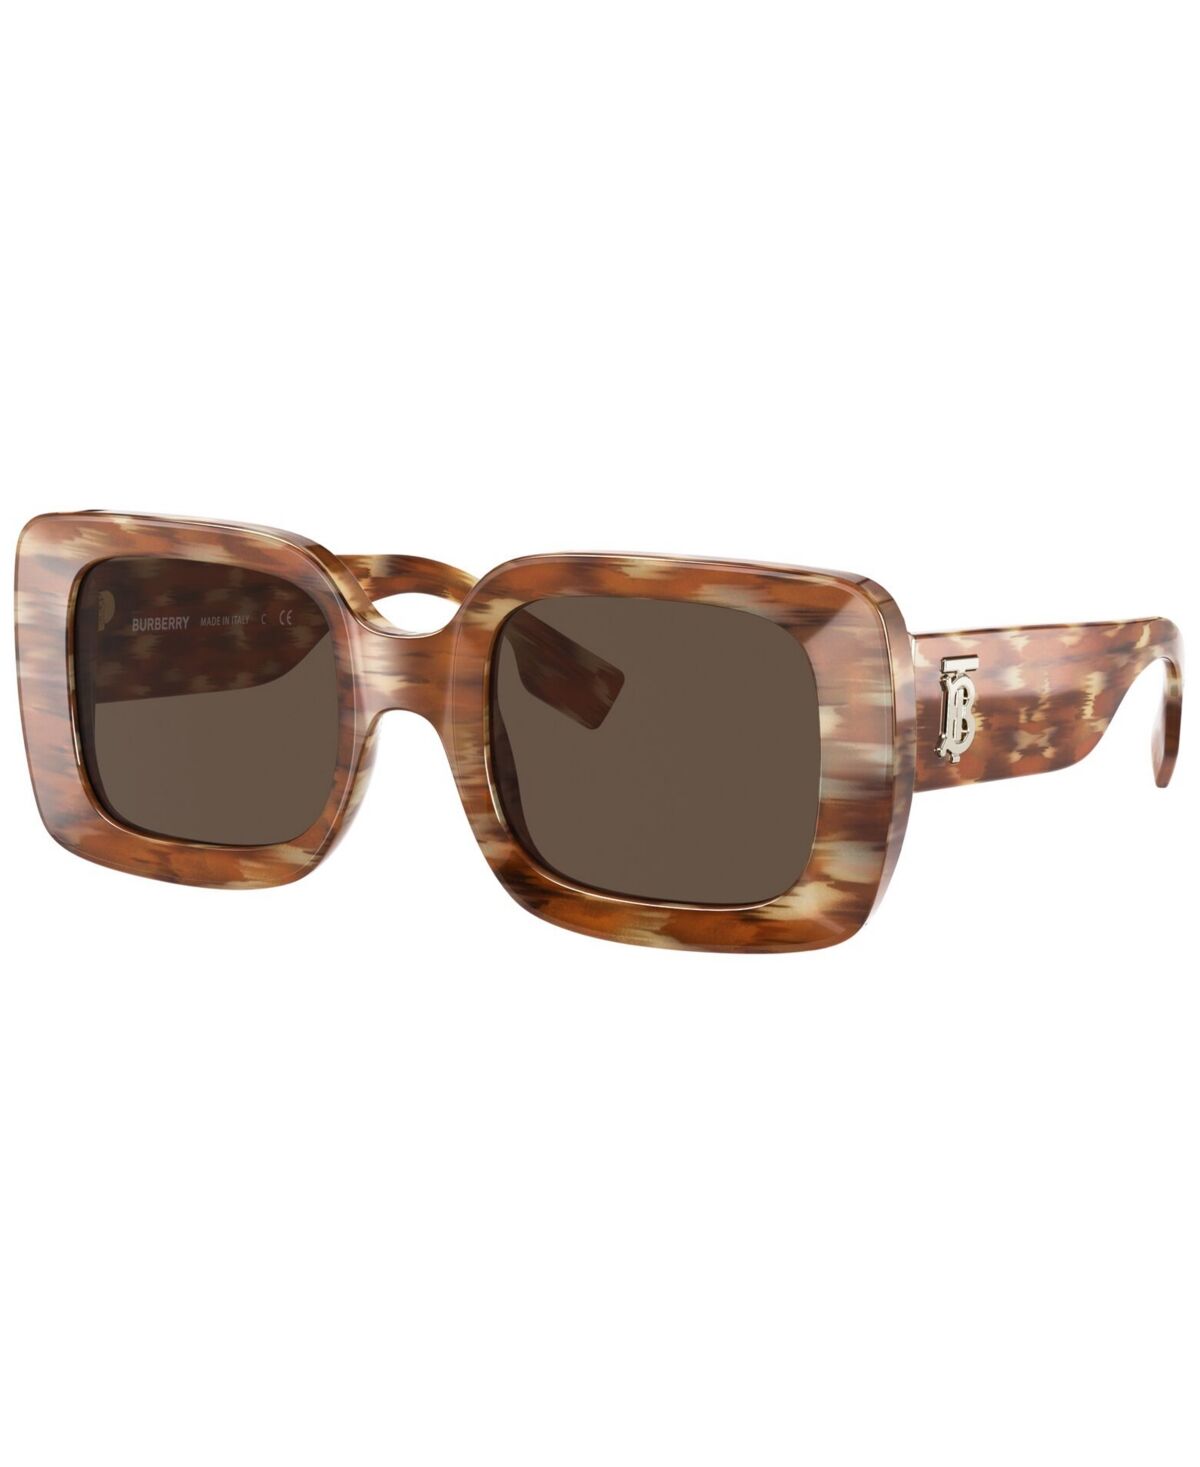 Burberry Women's Sunglasses, BE4327 - Brown